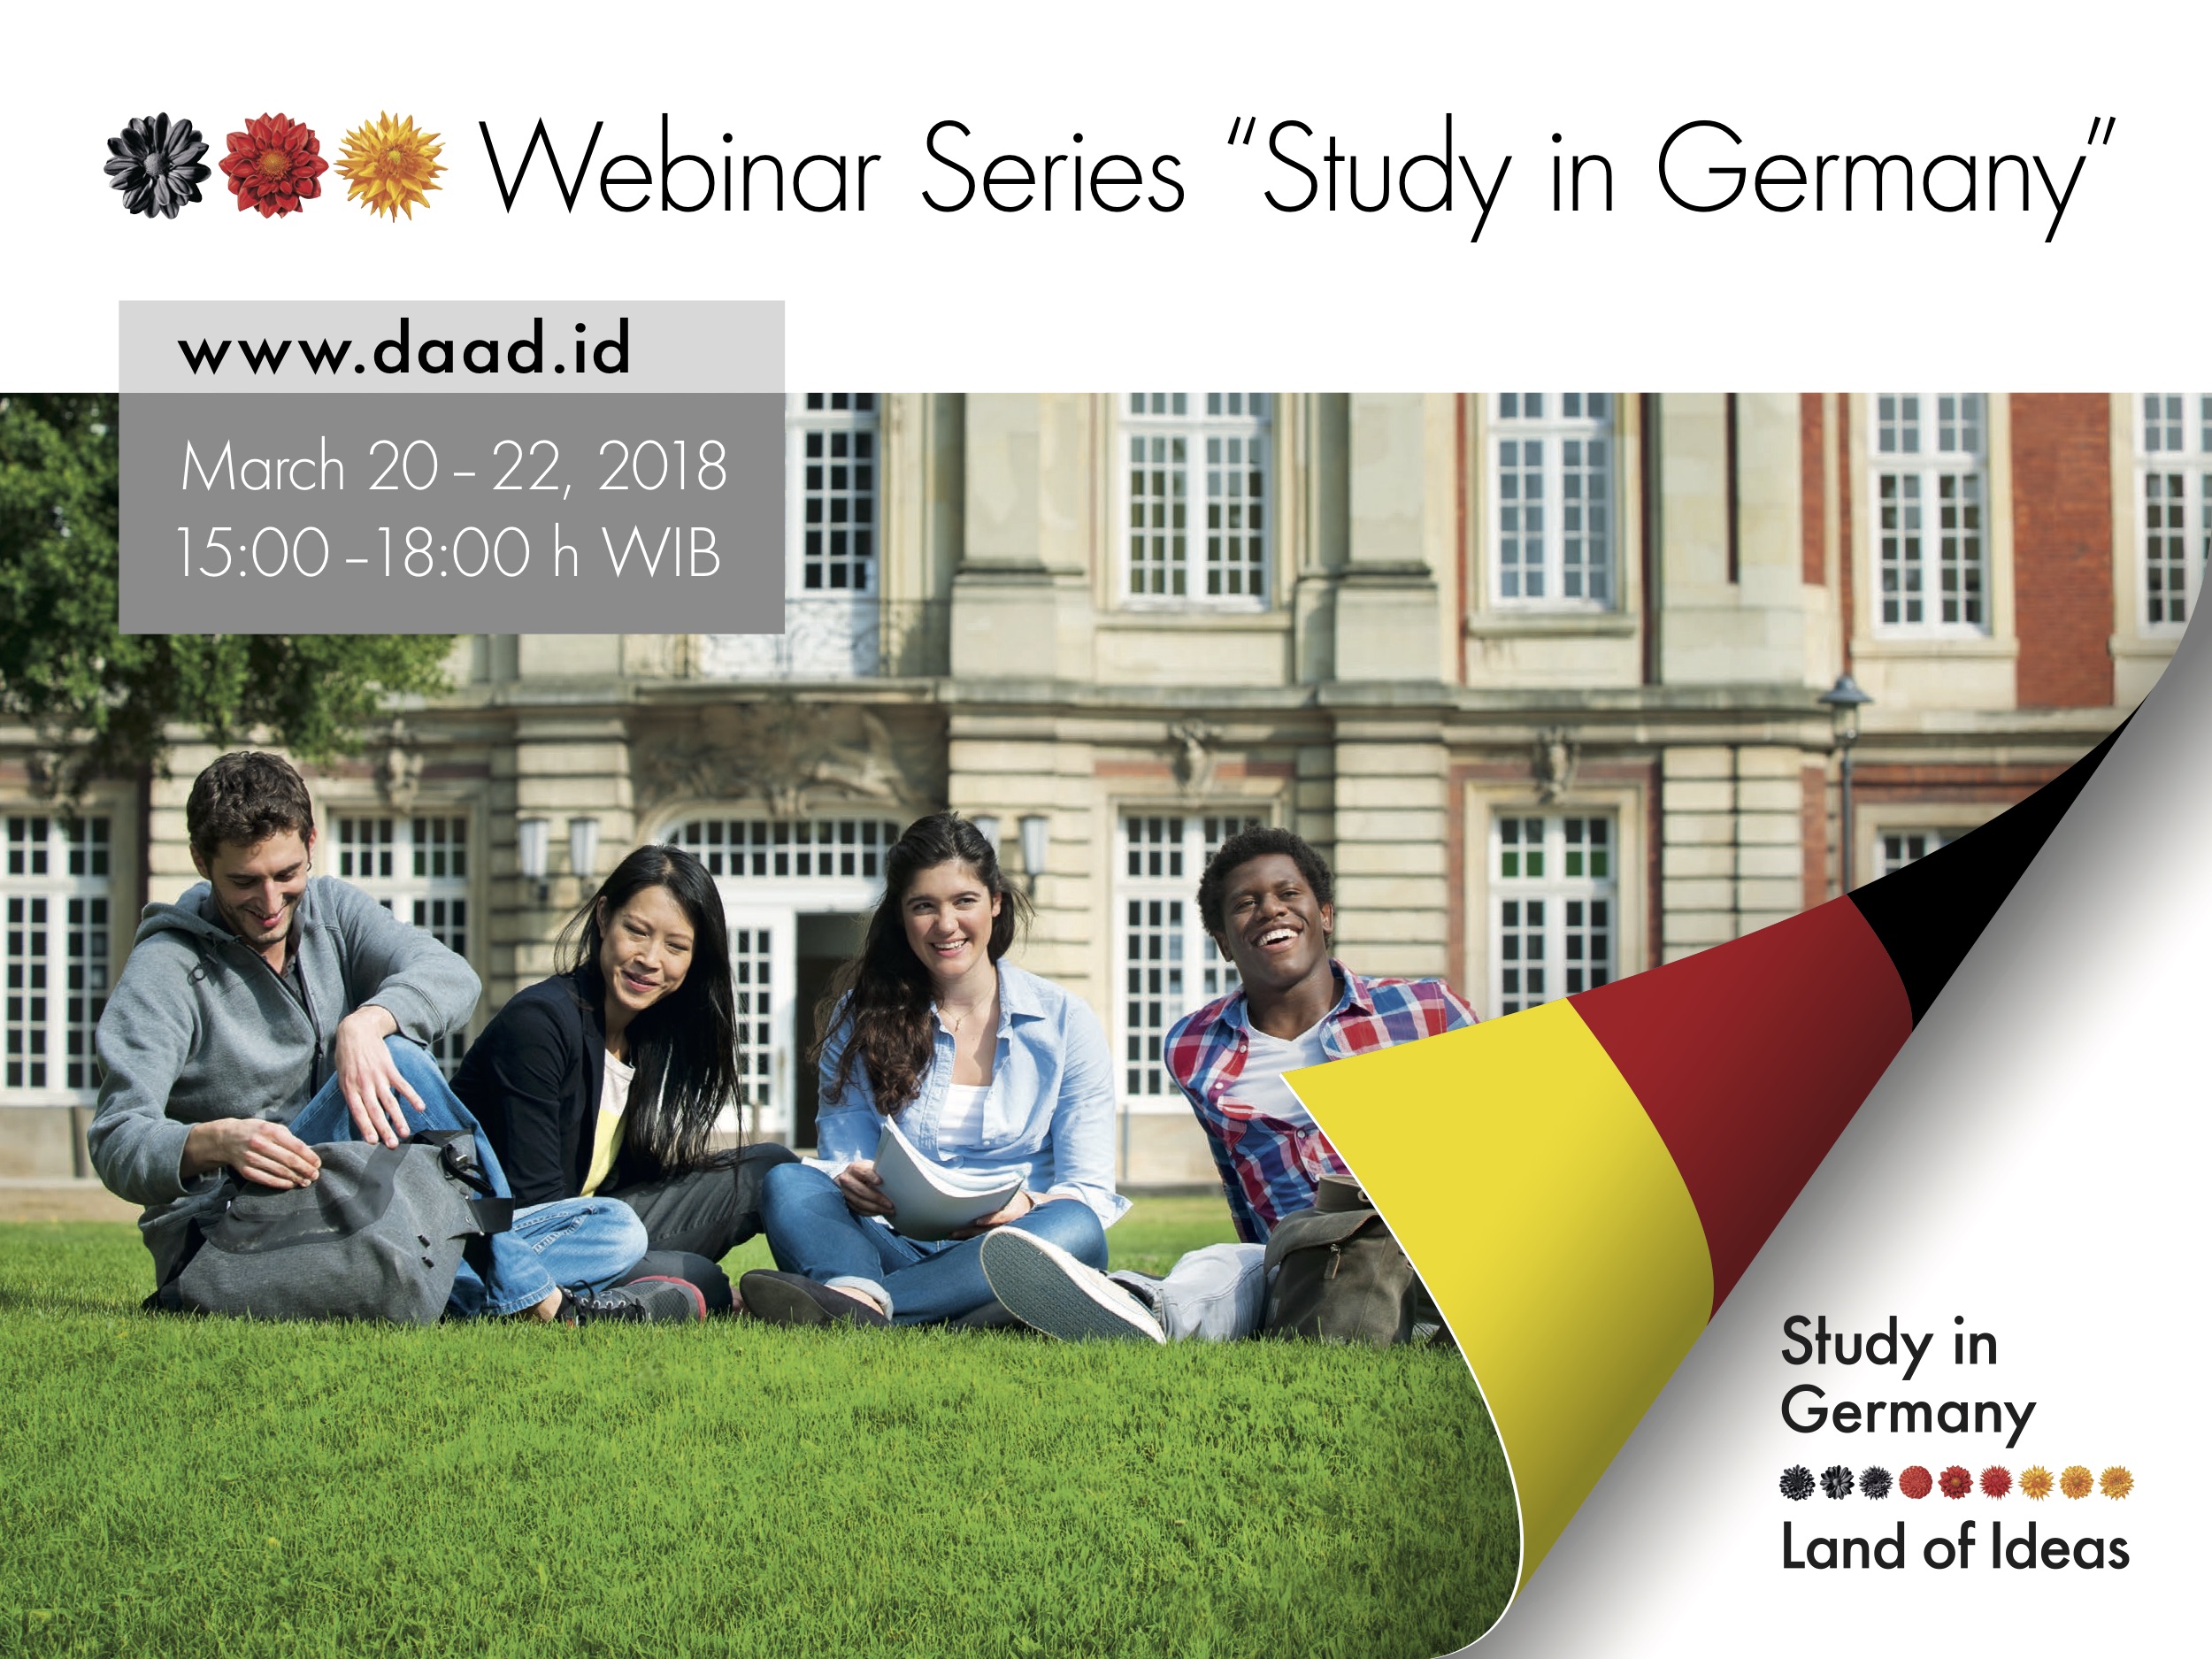 Preparing for The Webinar Series "Study in Germany"